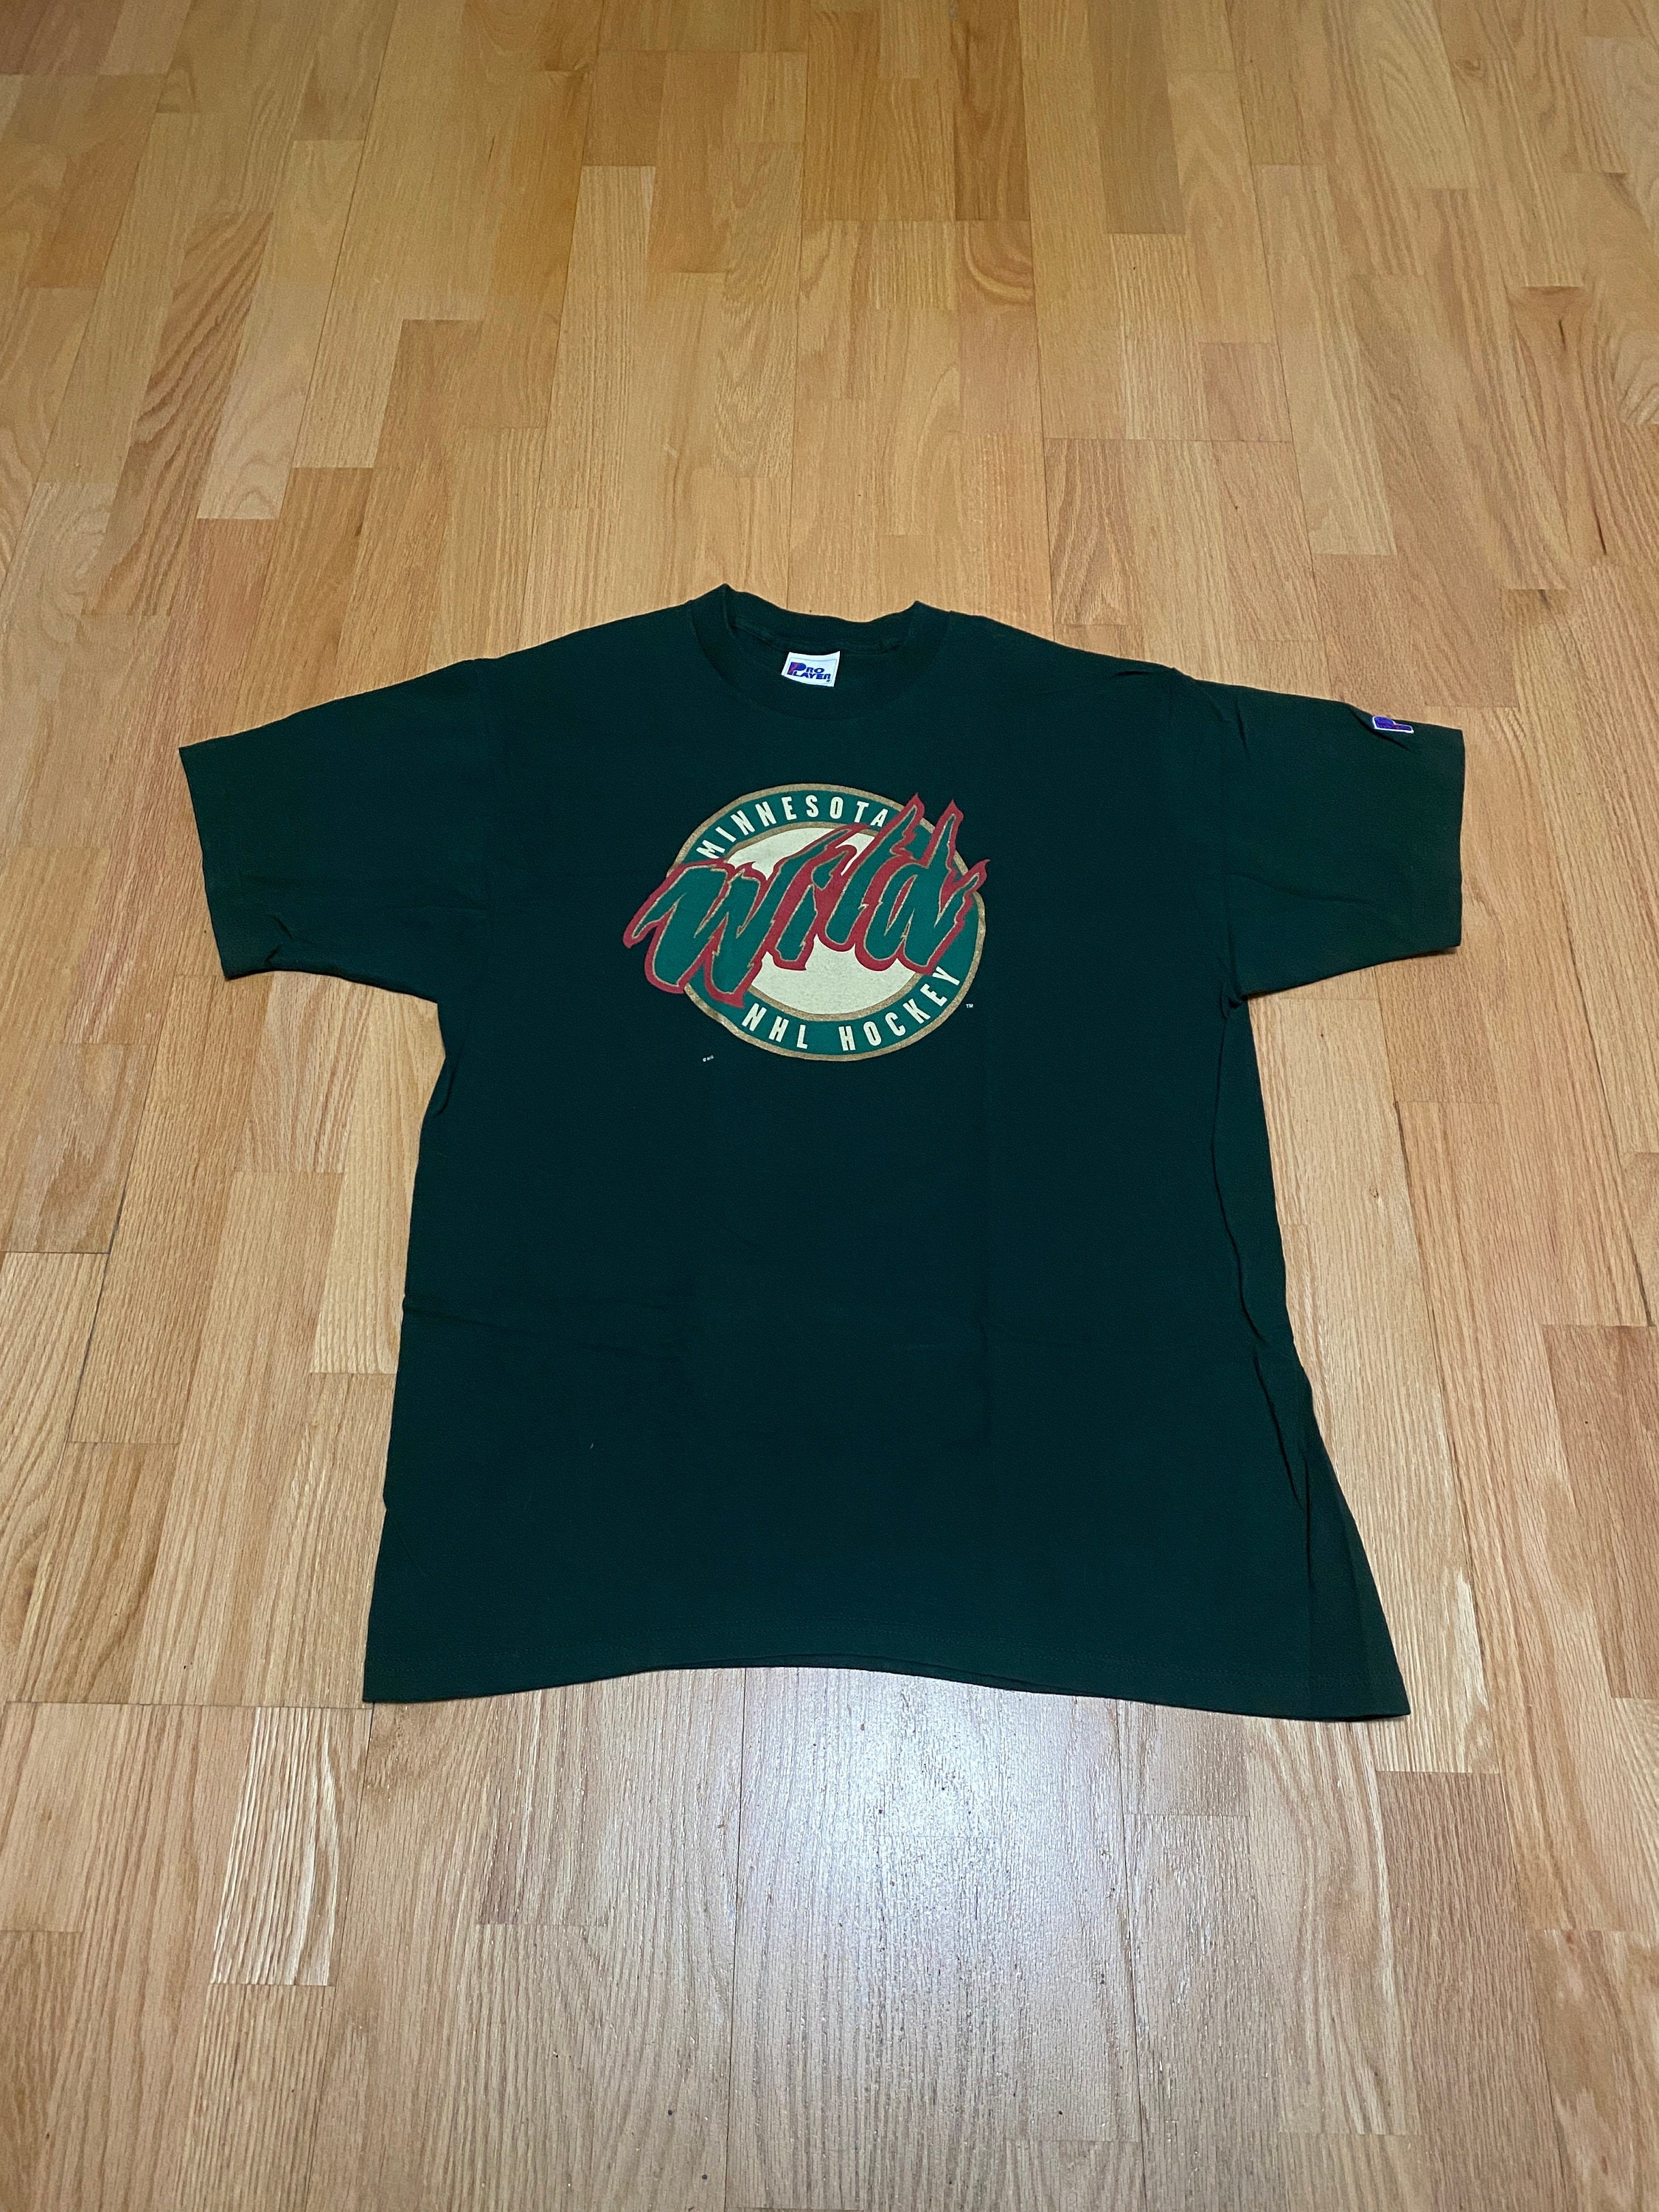 Vintage Minnesota Wild Shirt Men's XL Green Short Sleeve NHL Hockey Tshirt  Adult